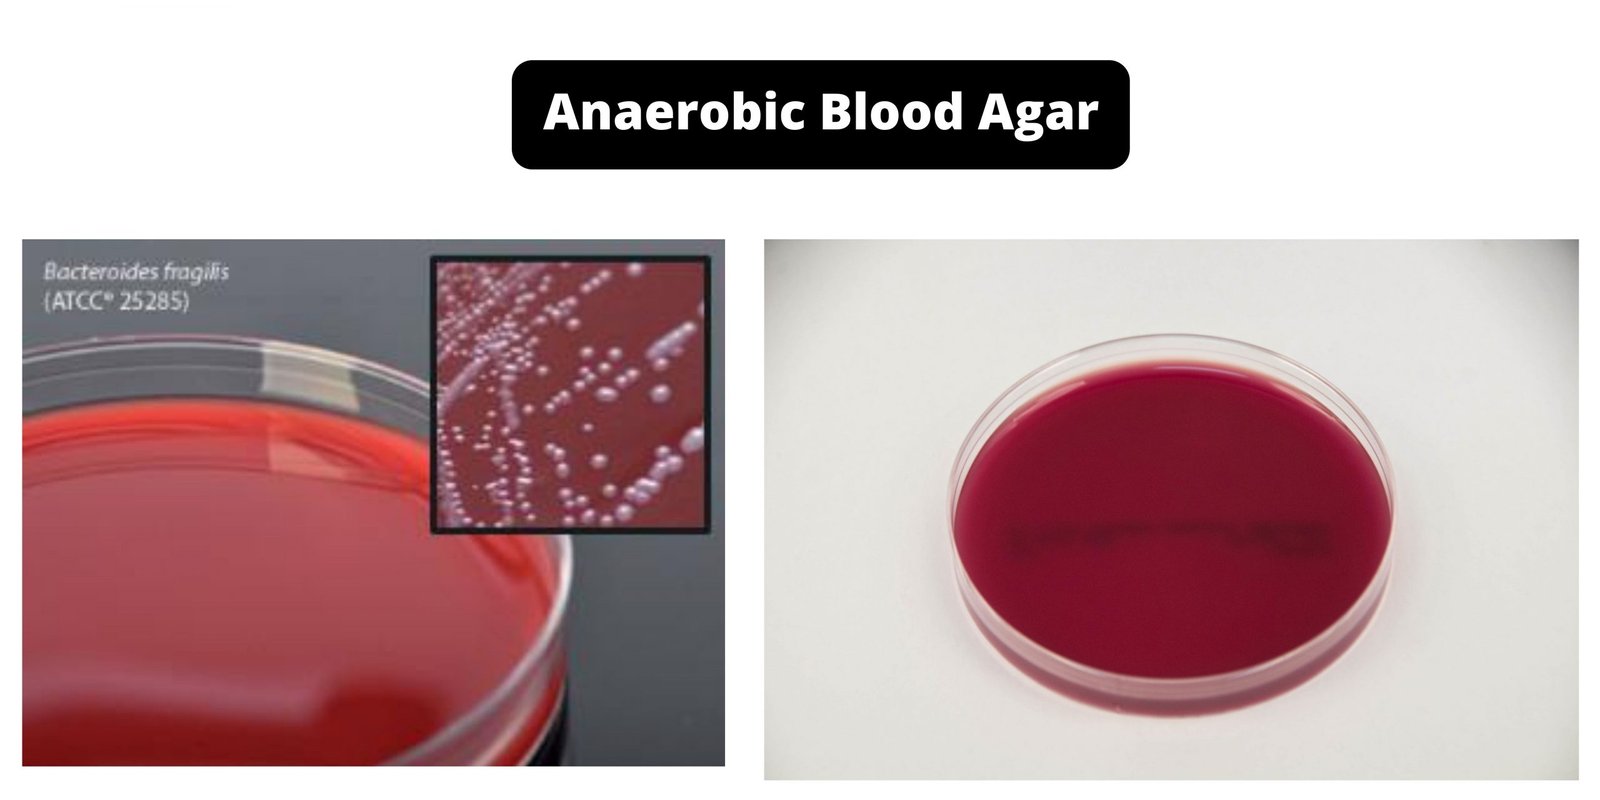 Anaerobic Blood Agar - Composition, Principle, Preparation, Results, Uses